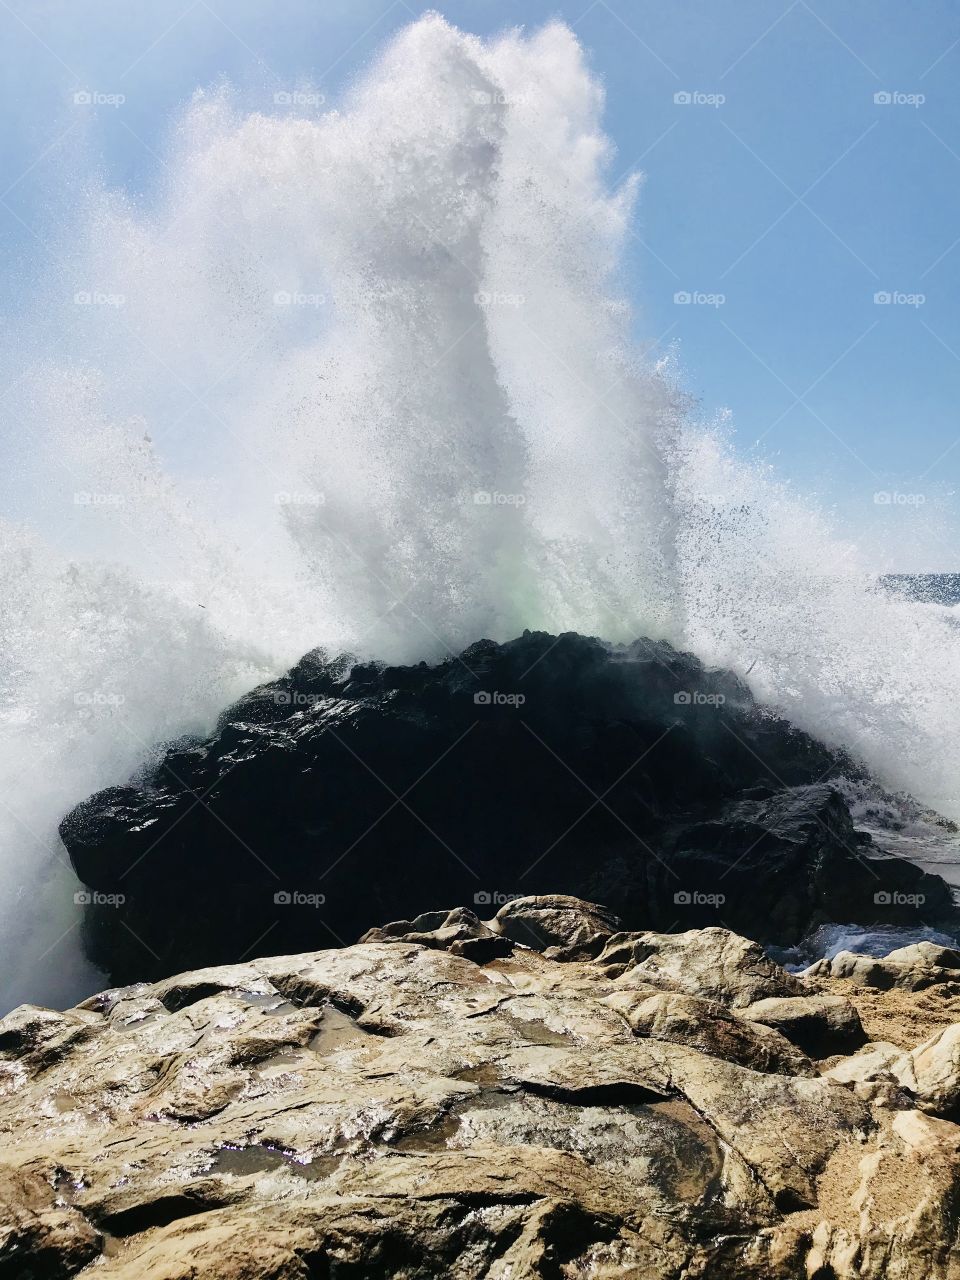 Waves crashing in to Alme huge rocks, making som good photographs